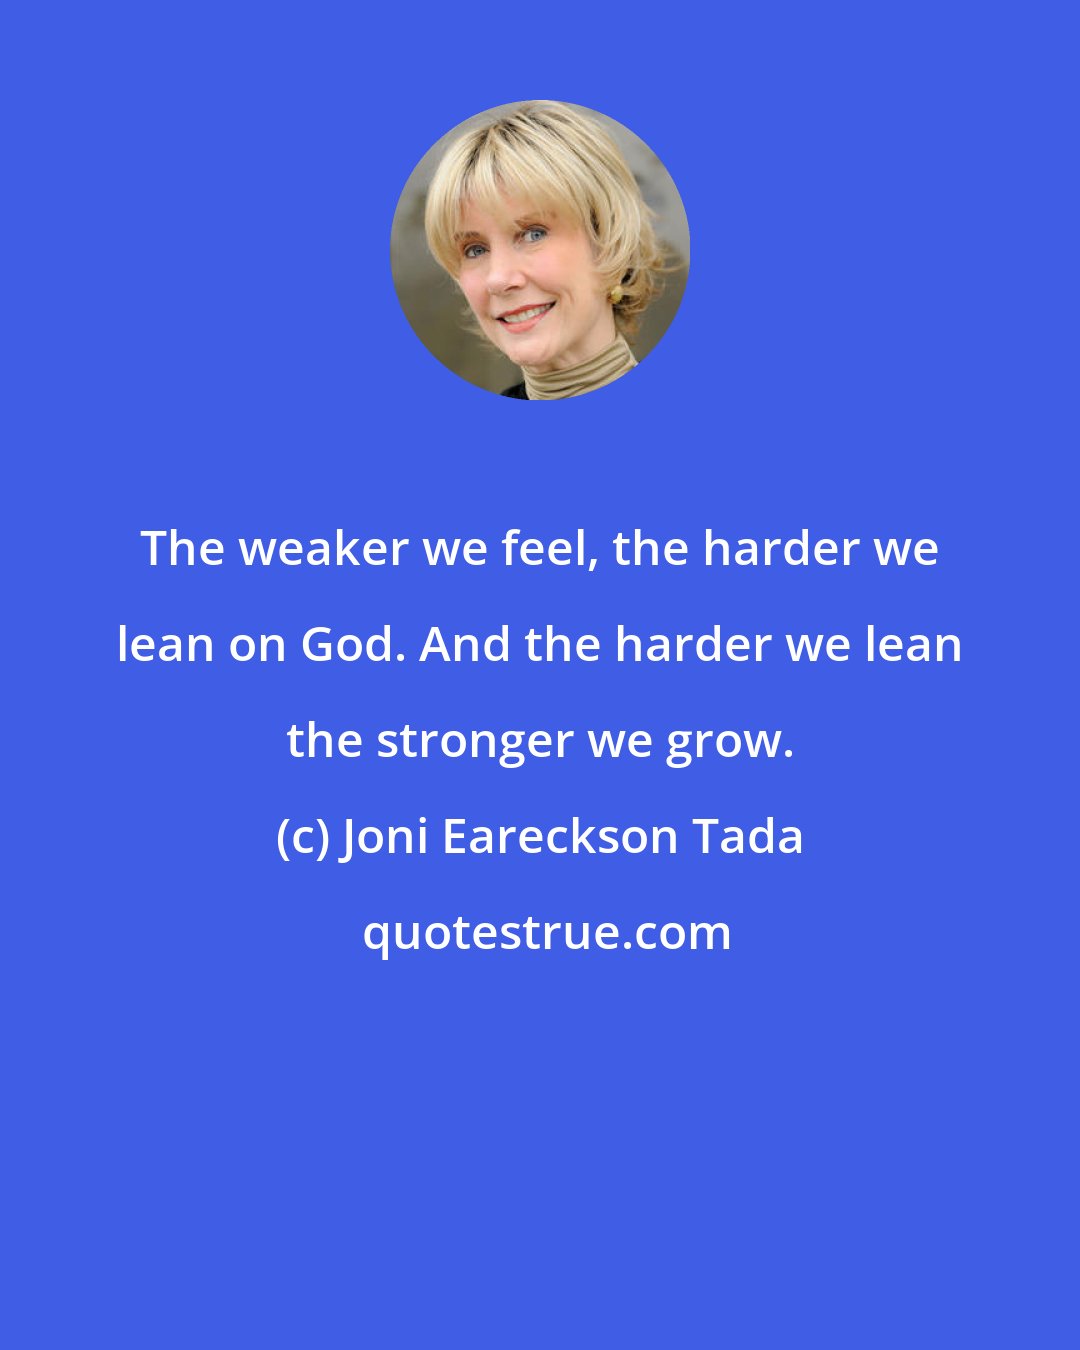 Joni Eareckson Tada: The weaker we feel, the harder we lean on God. And the harder we lean the stronger we grow.